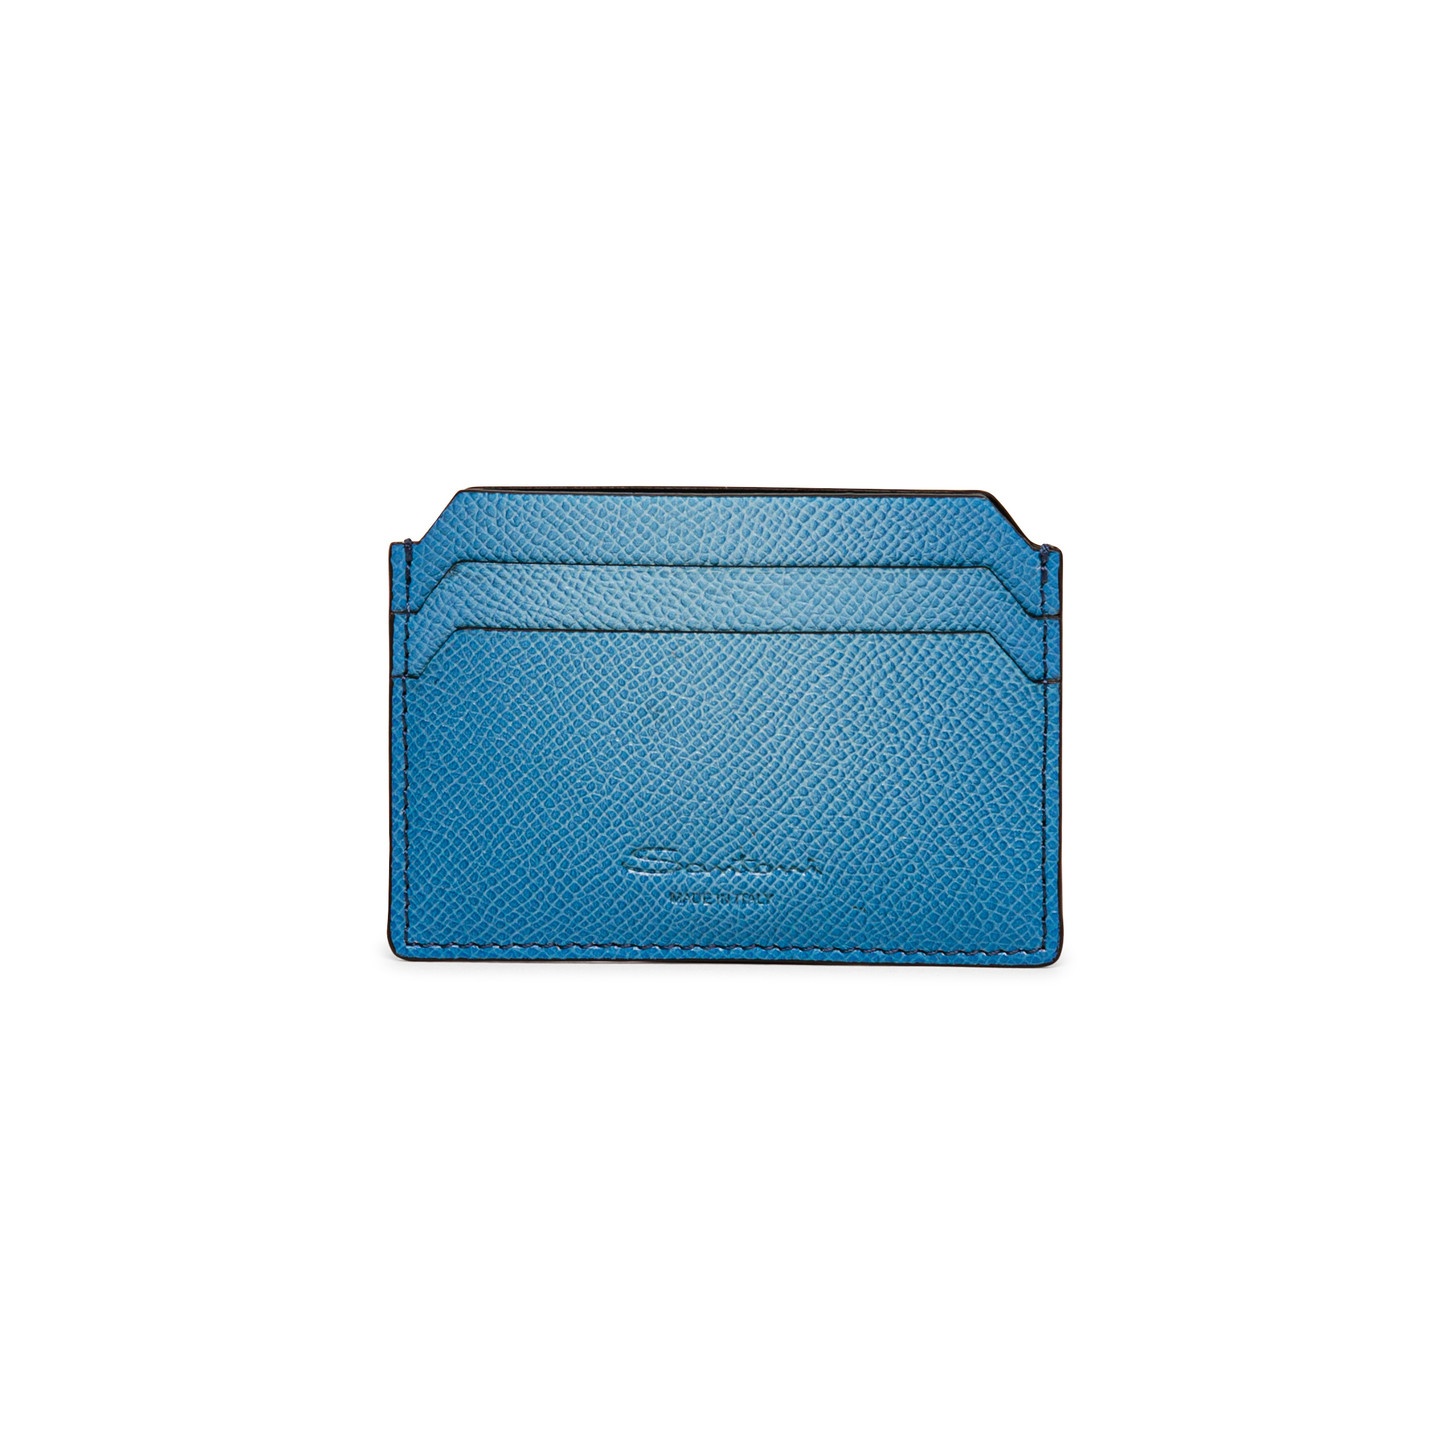 Light blue saffiano leather credit card holder - 1